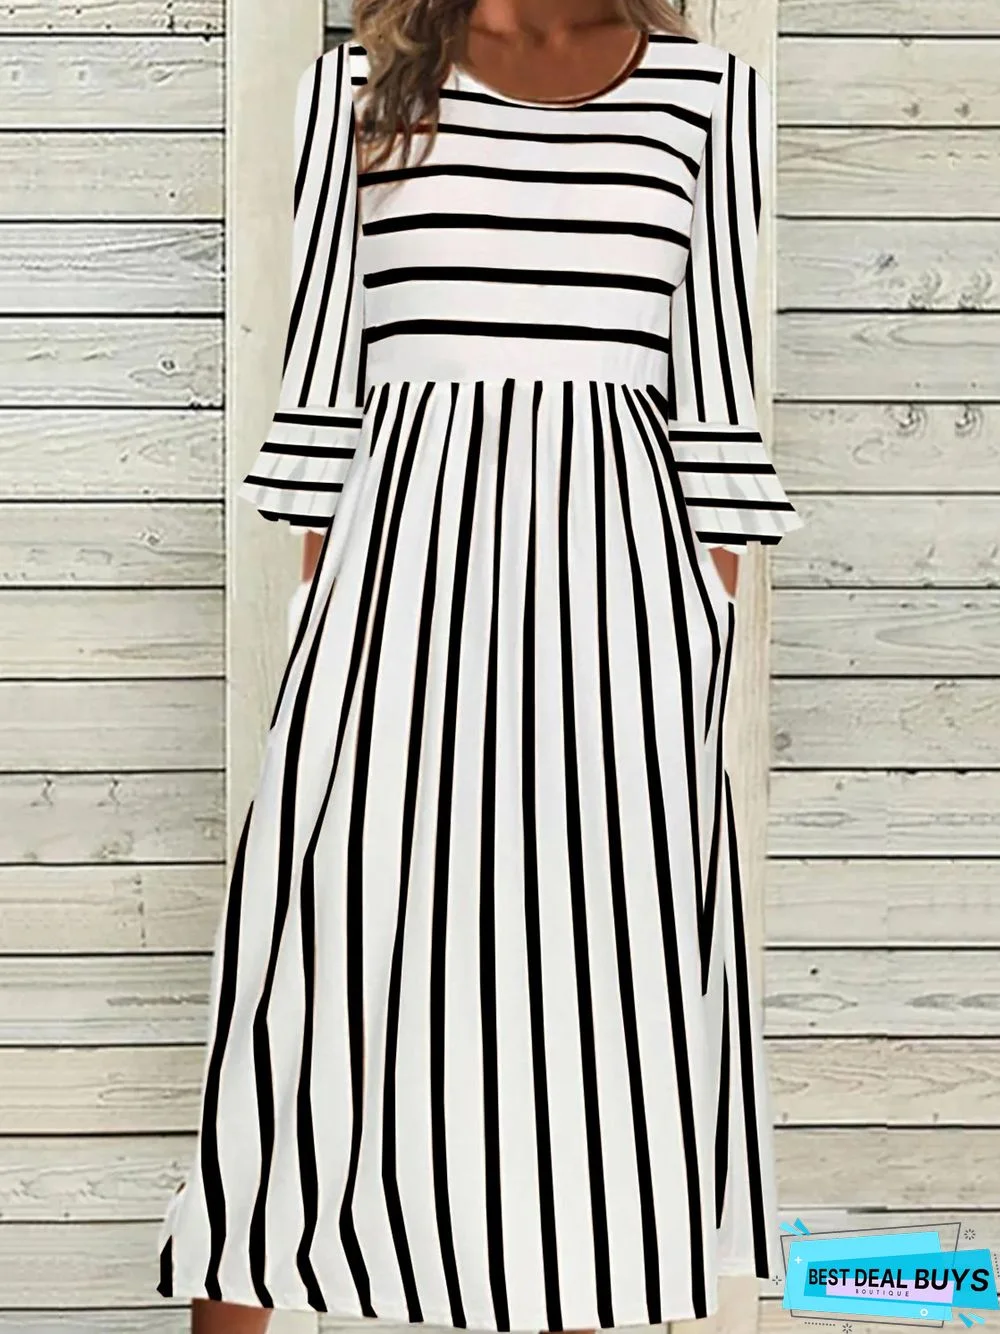 Striped Casual Autumn Lightweight No Elasticity Daily Standard Three Quarter Regular Size Dress for Women